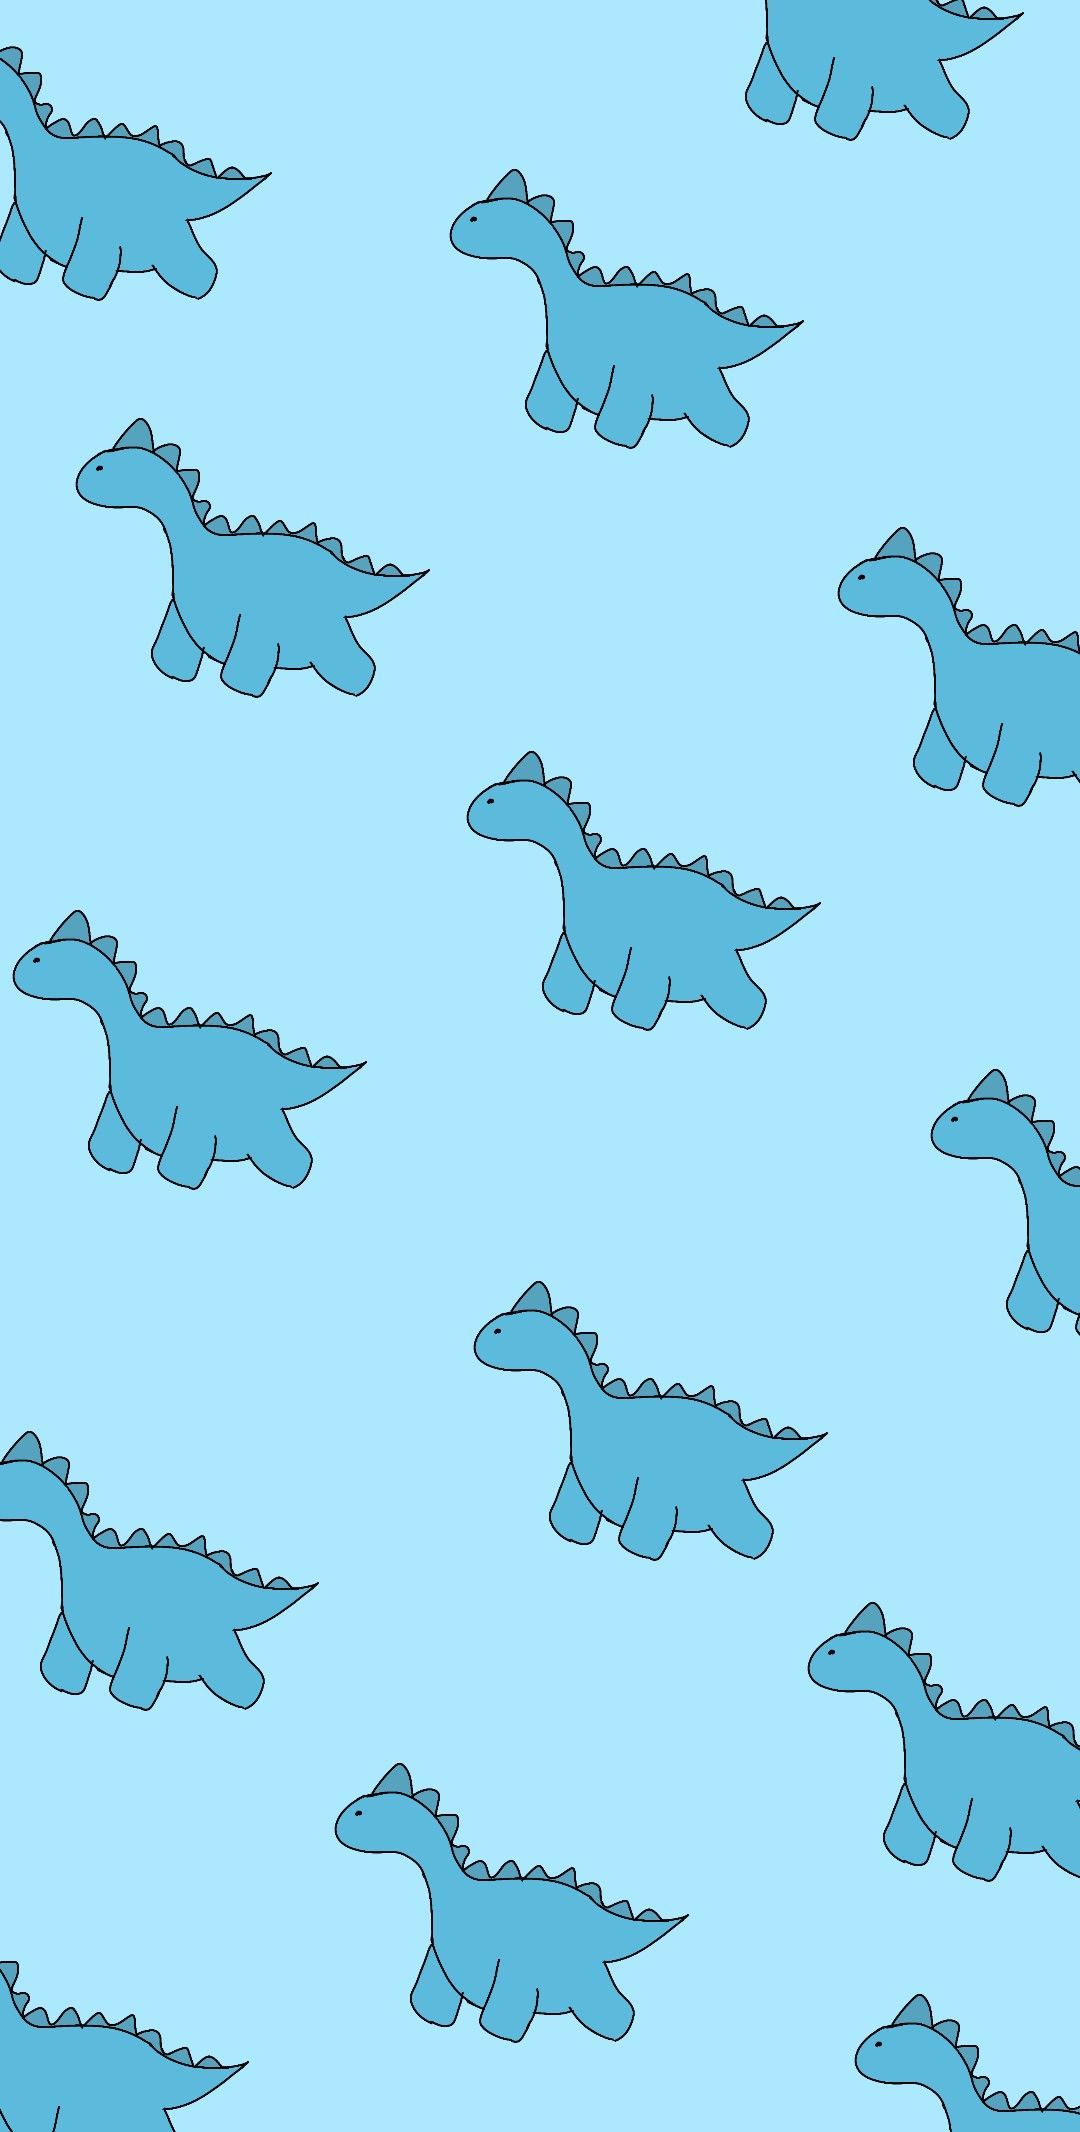 Dino wallpaper. Cute image for wallpaper, Dinosaur wallpaper, Cute simple wallpaper